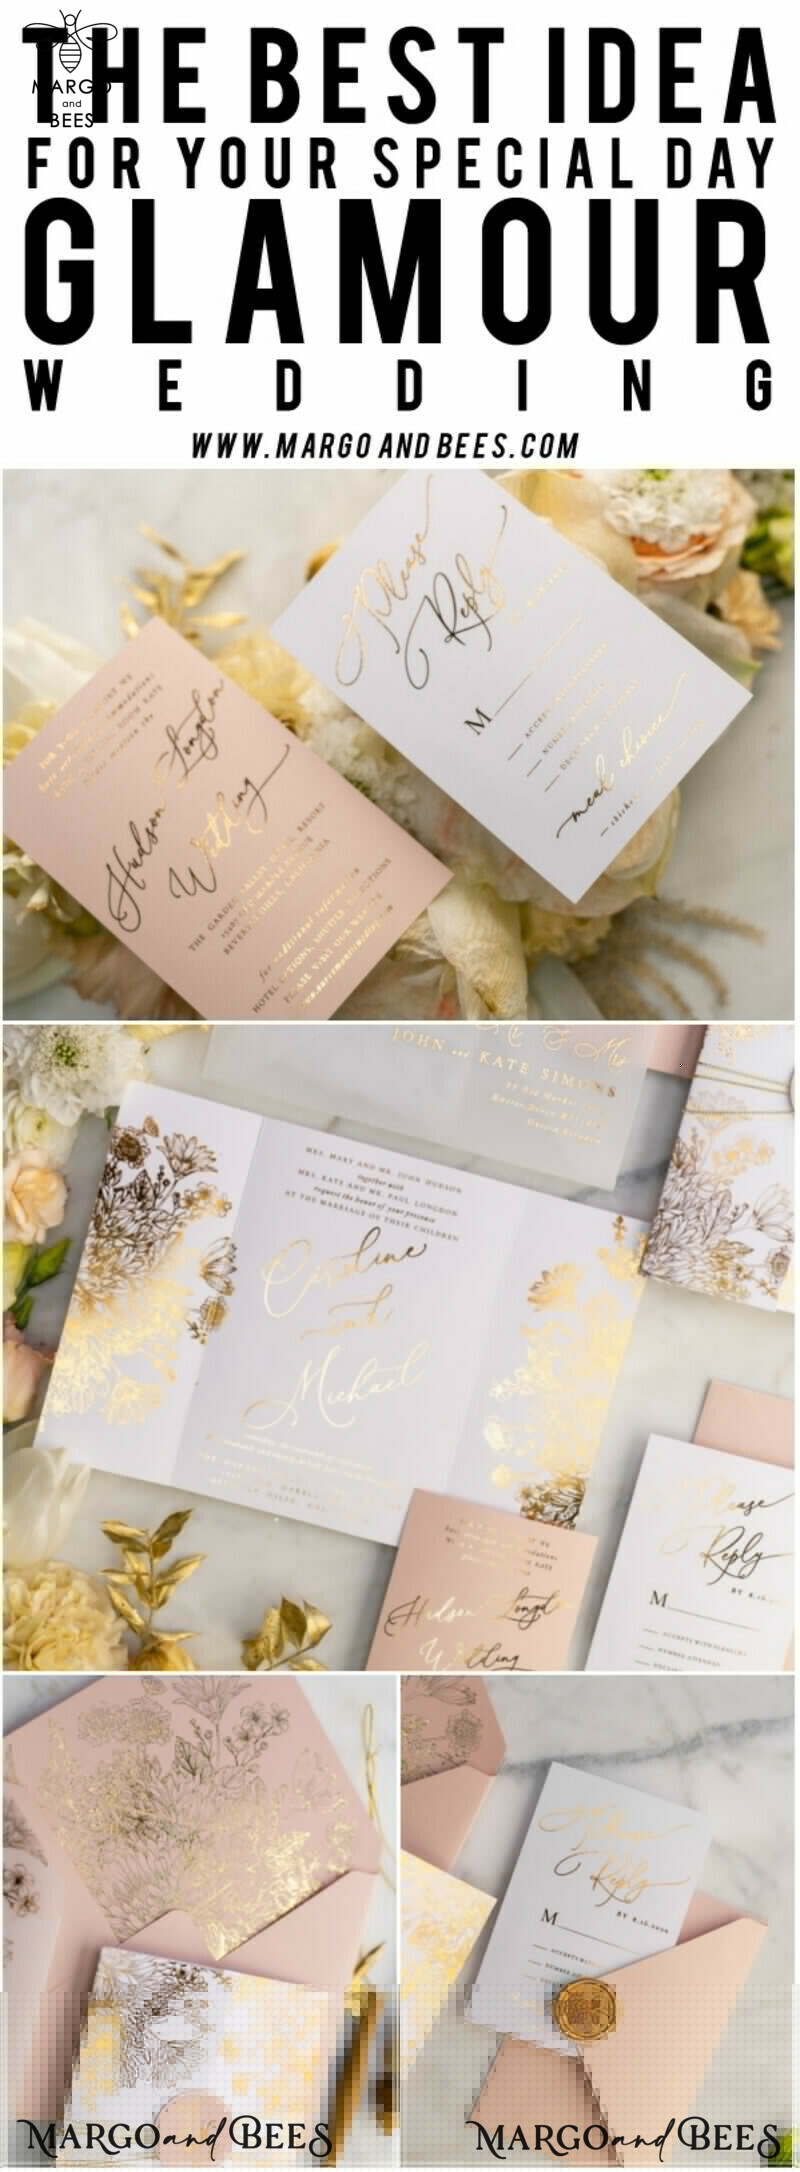 Luxury Arabic Golden Wedding Invitations, Glamour Gold Foil Wedding Invites, Romantic Blush Pink Wedding Cards, Bespoke Indian Wedding Stationery-45